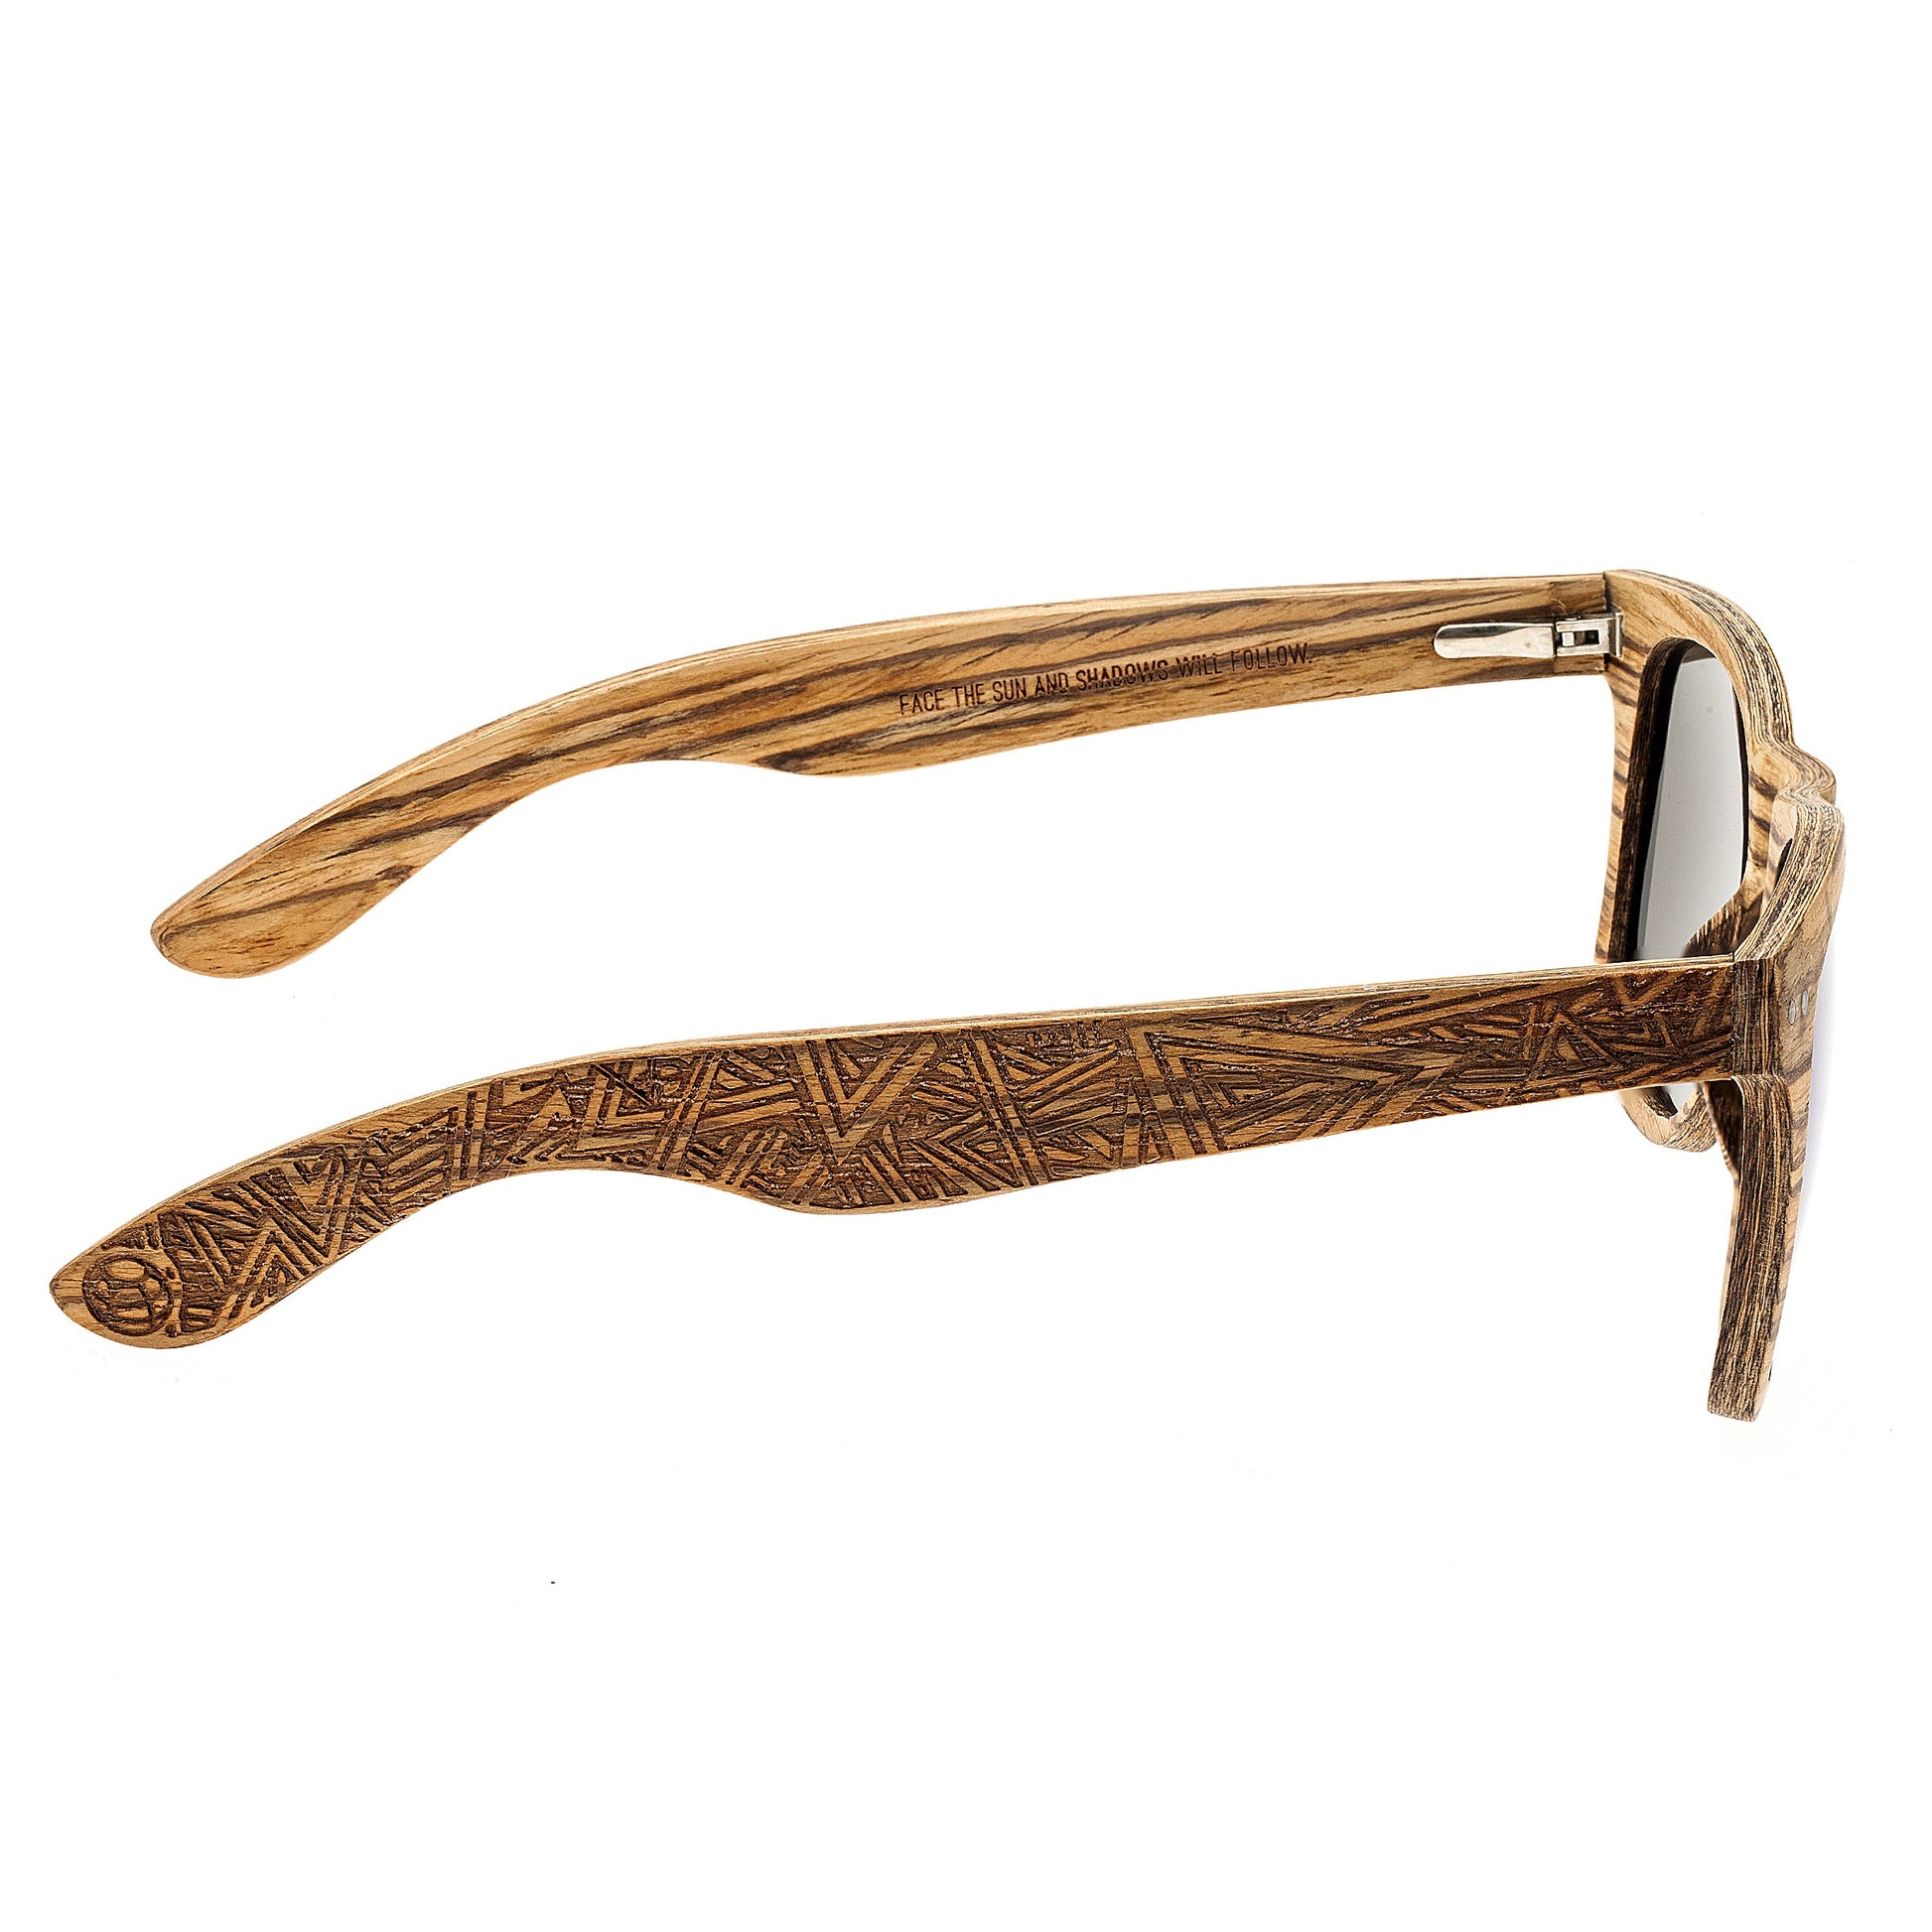 Earth Wood Cape Cod Polarized Sunglasses - Zebrawood/Blue - ESG060Z